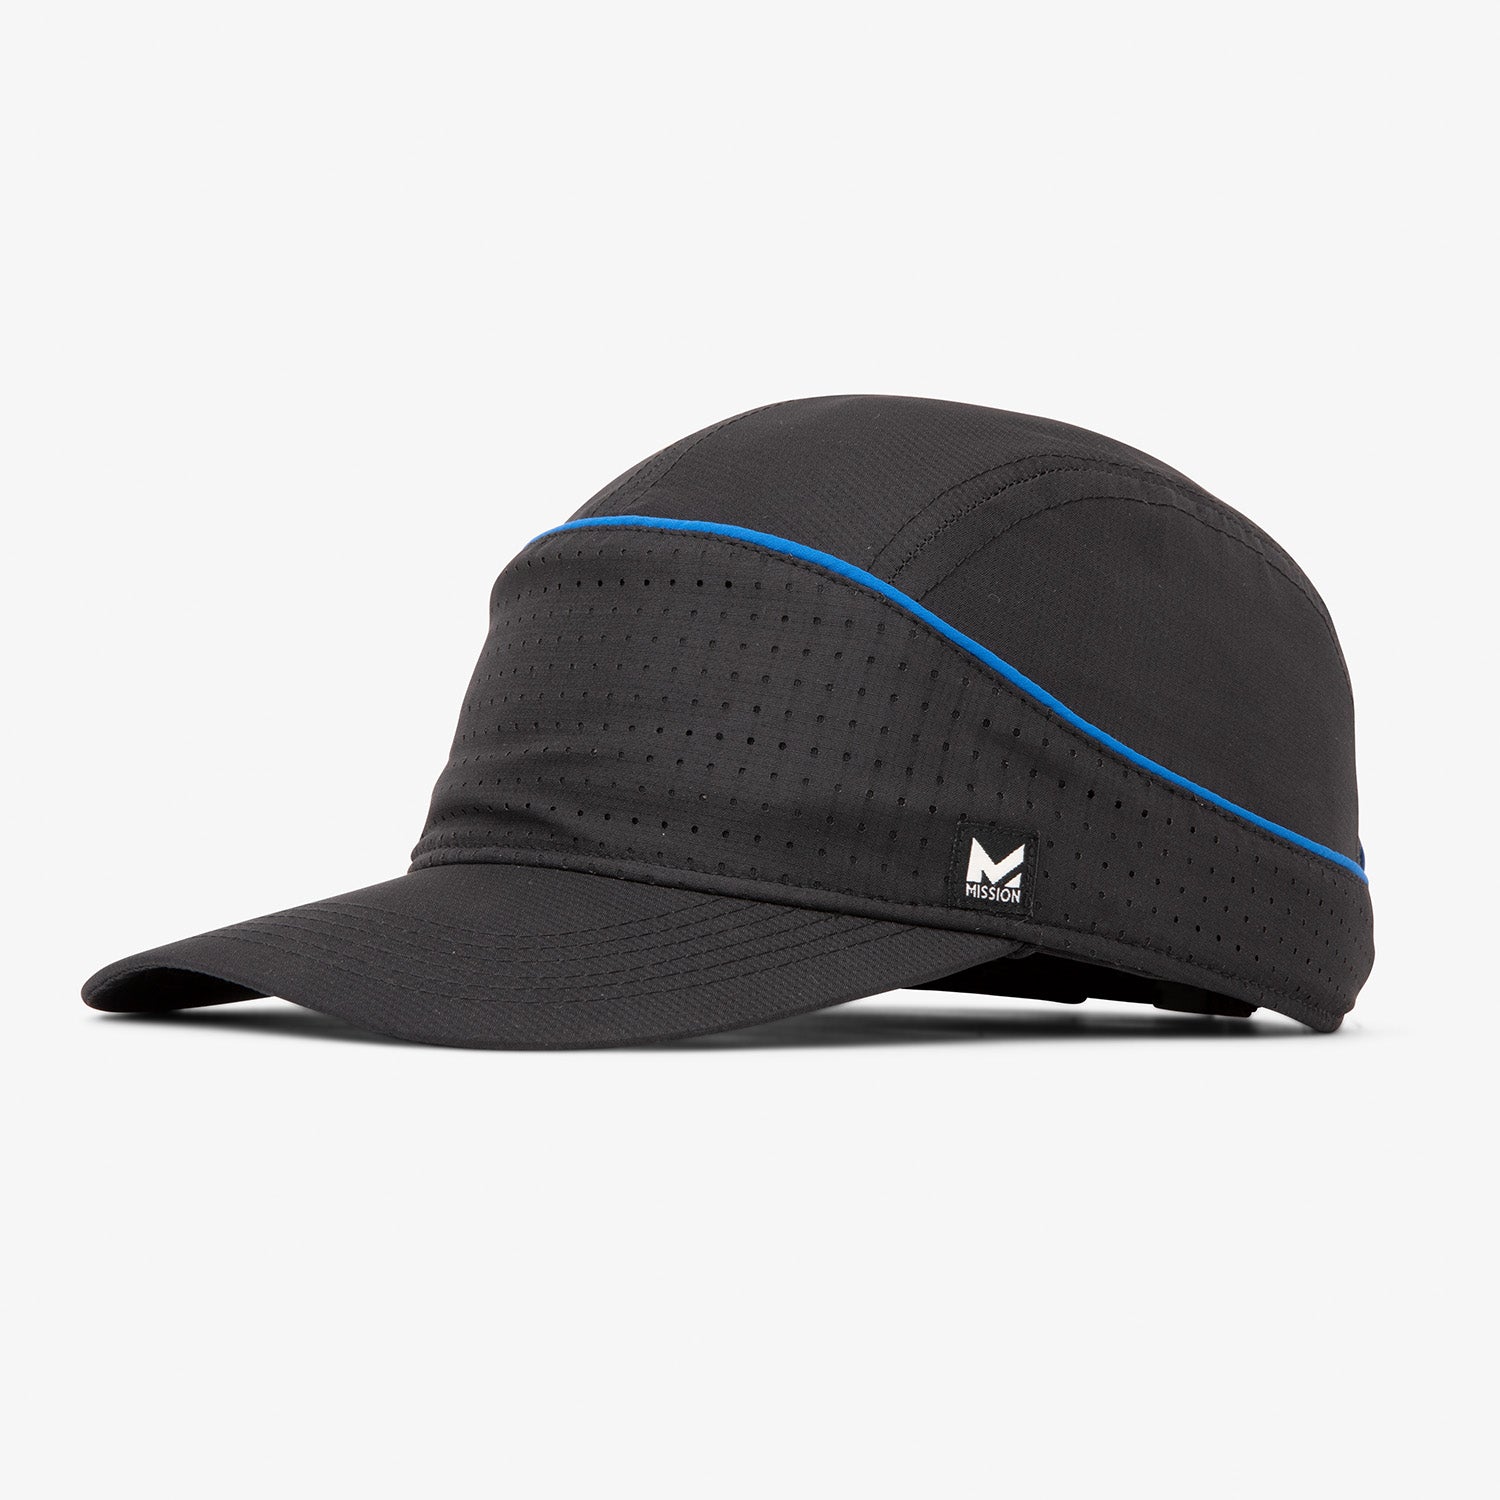 Cooling Racer Hat Caps MISSION One Size Black/Blue 